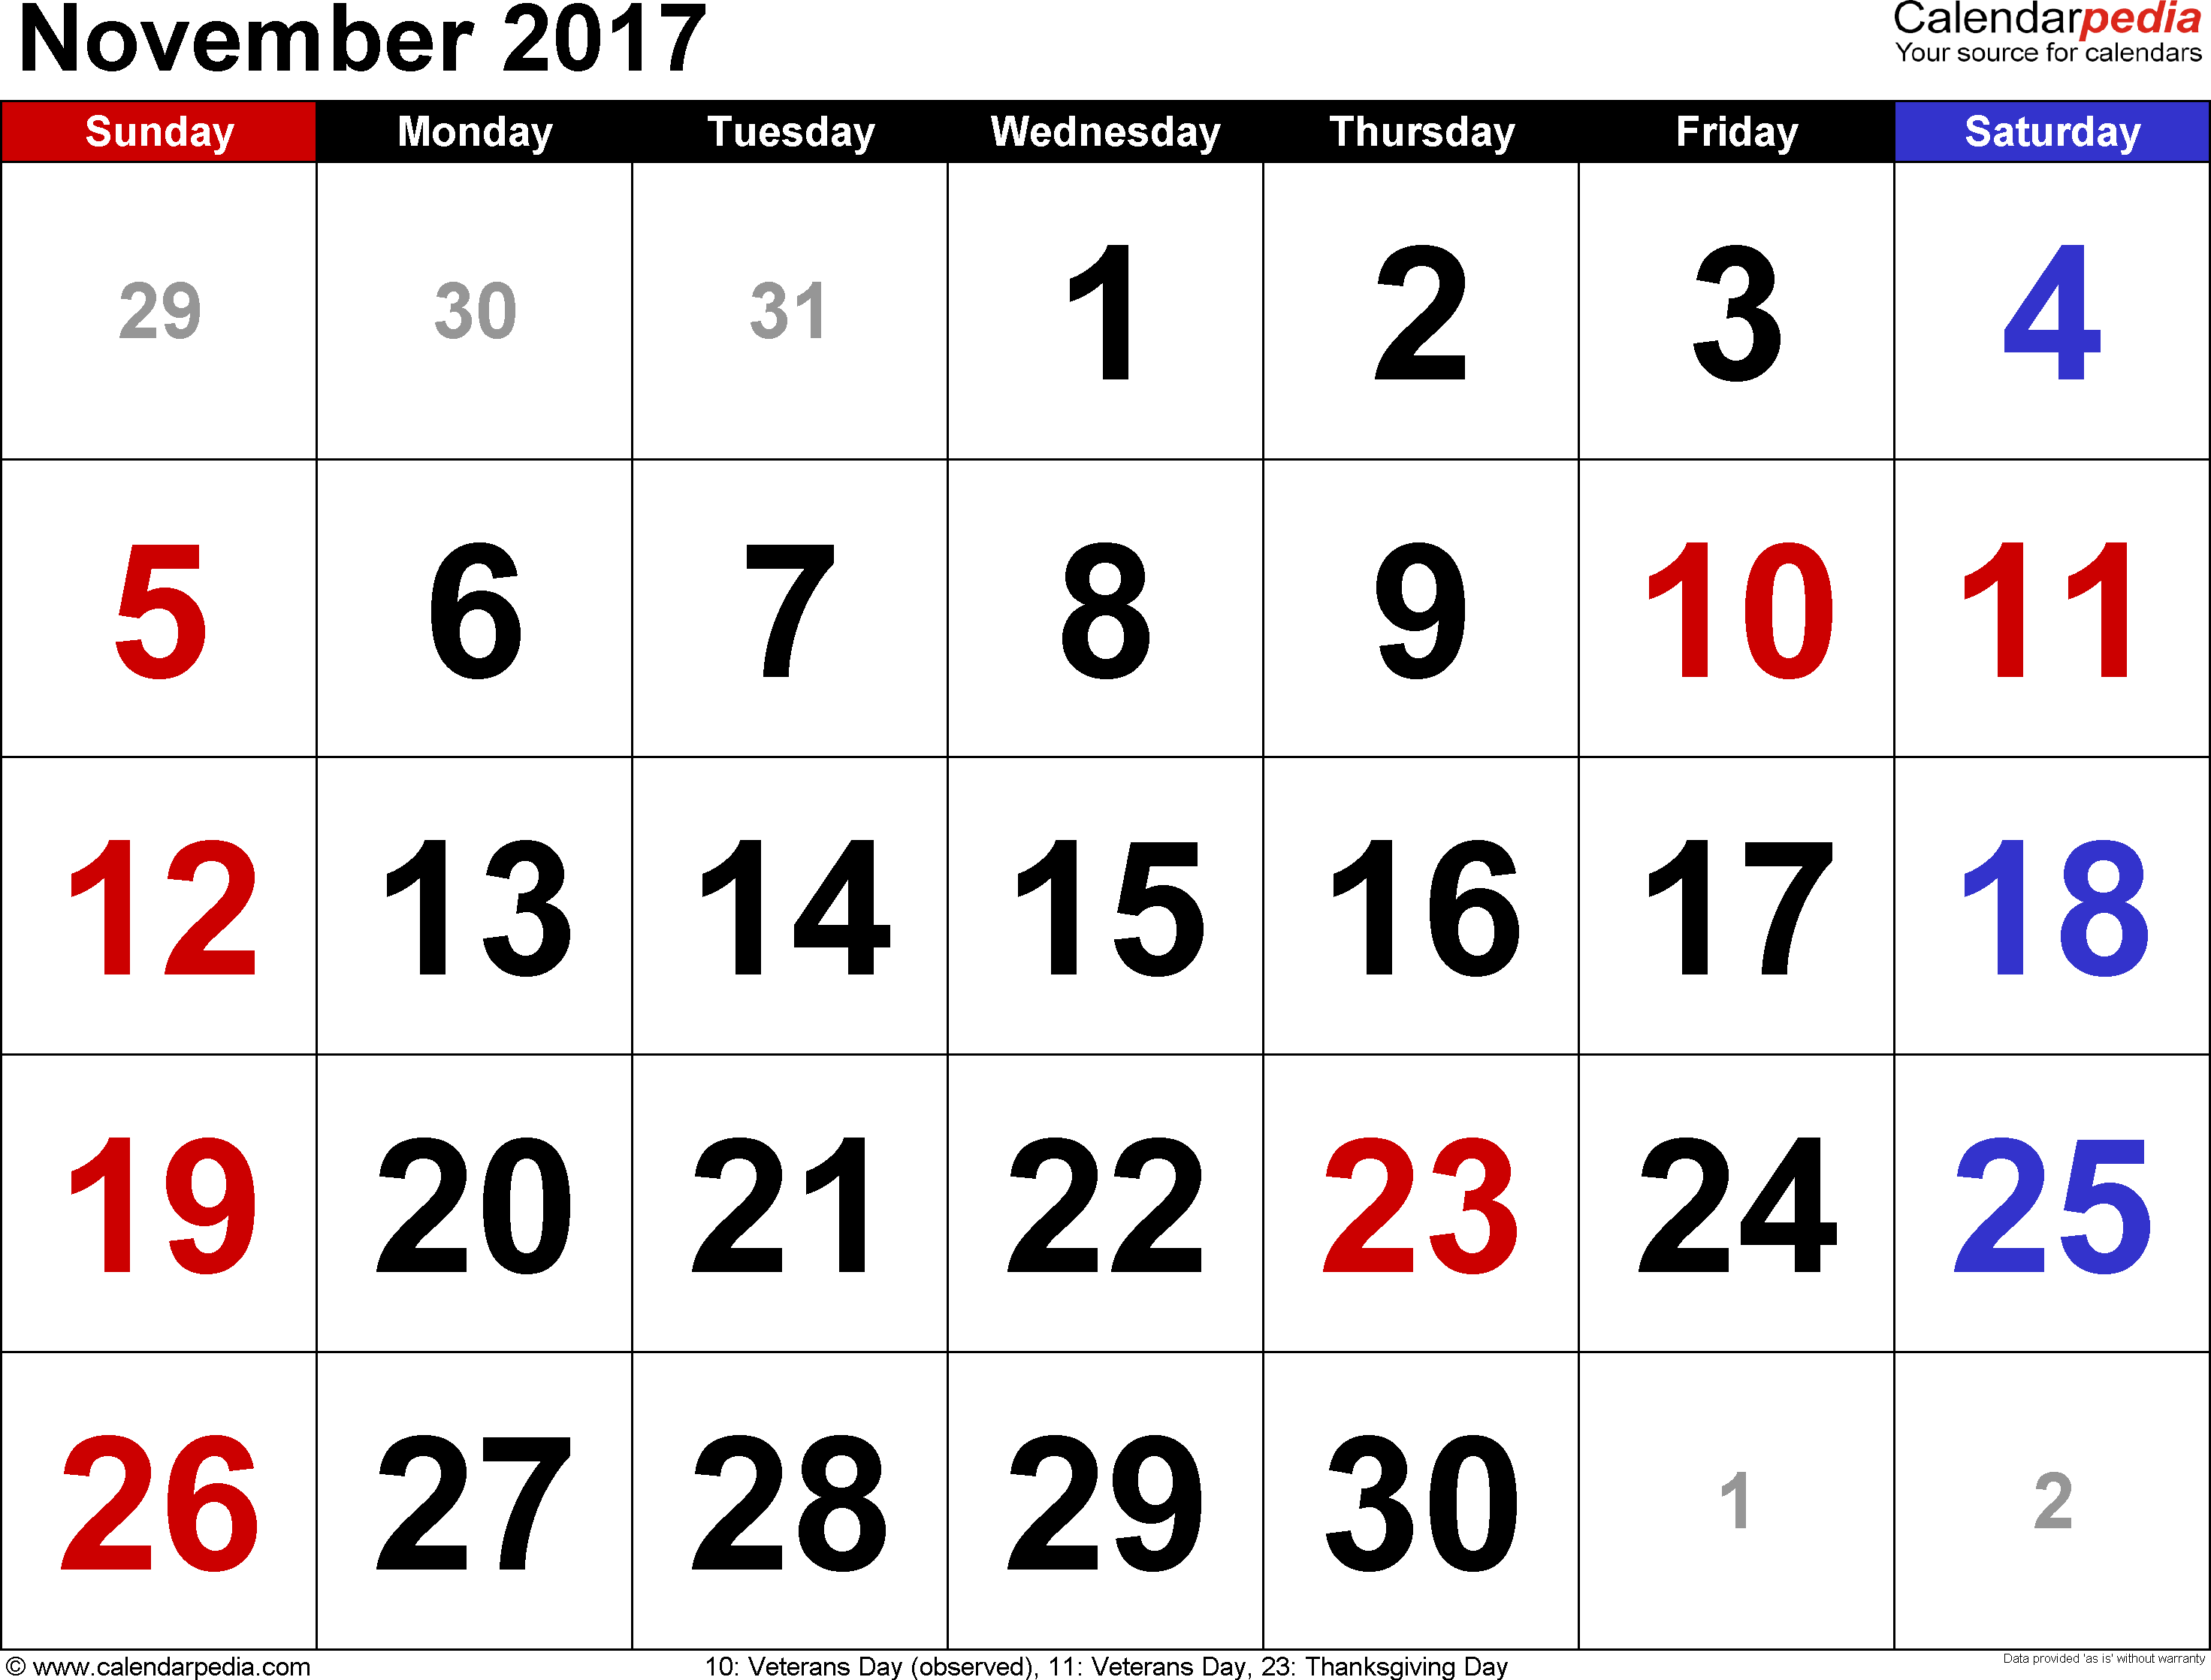 November 2017 Calendars for Word, Excel & PDF